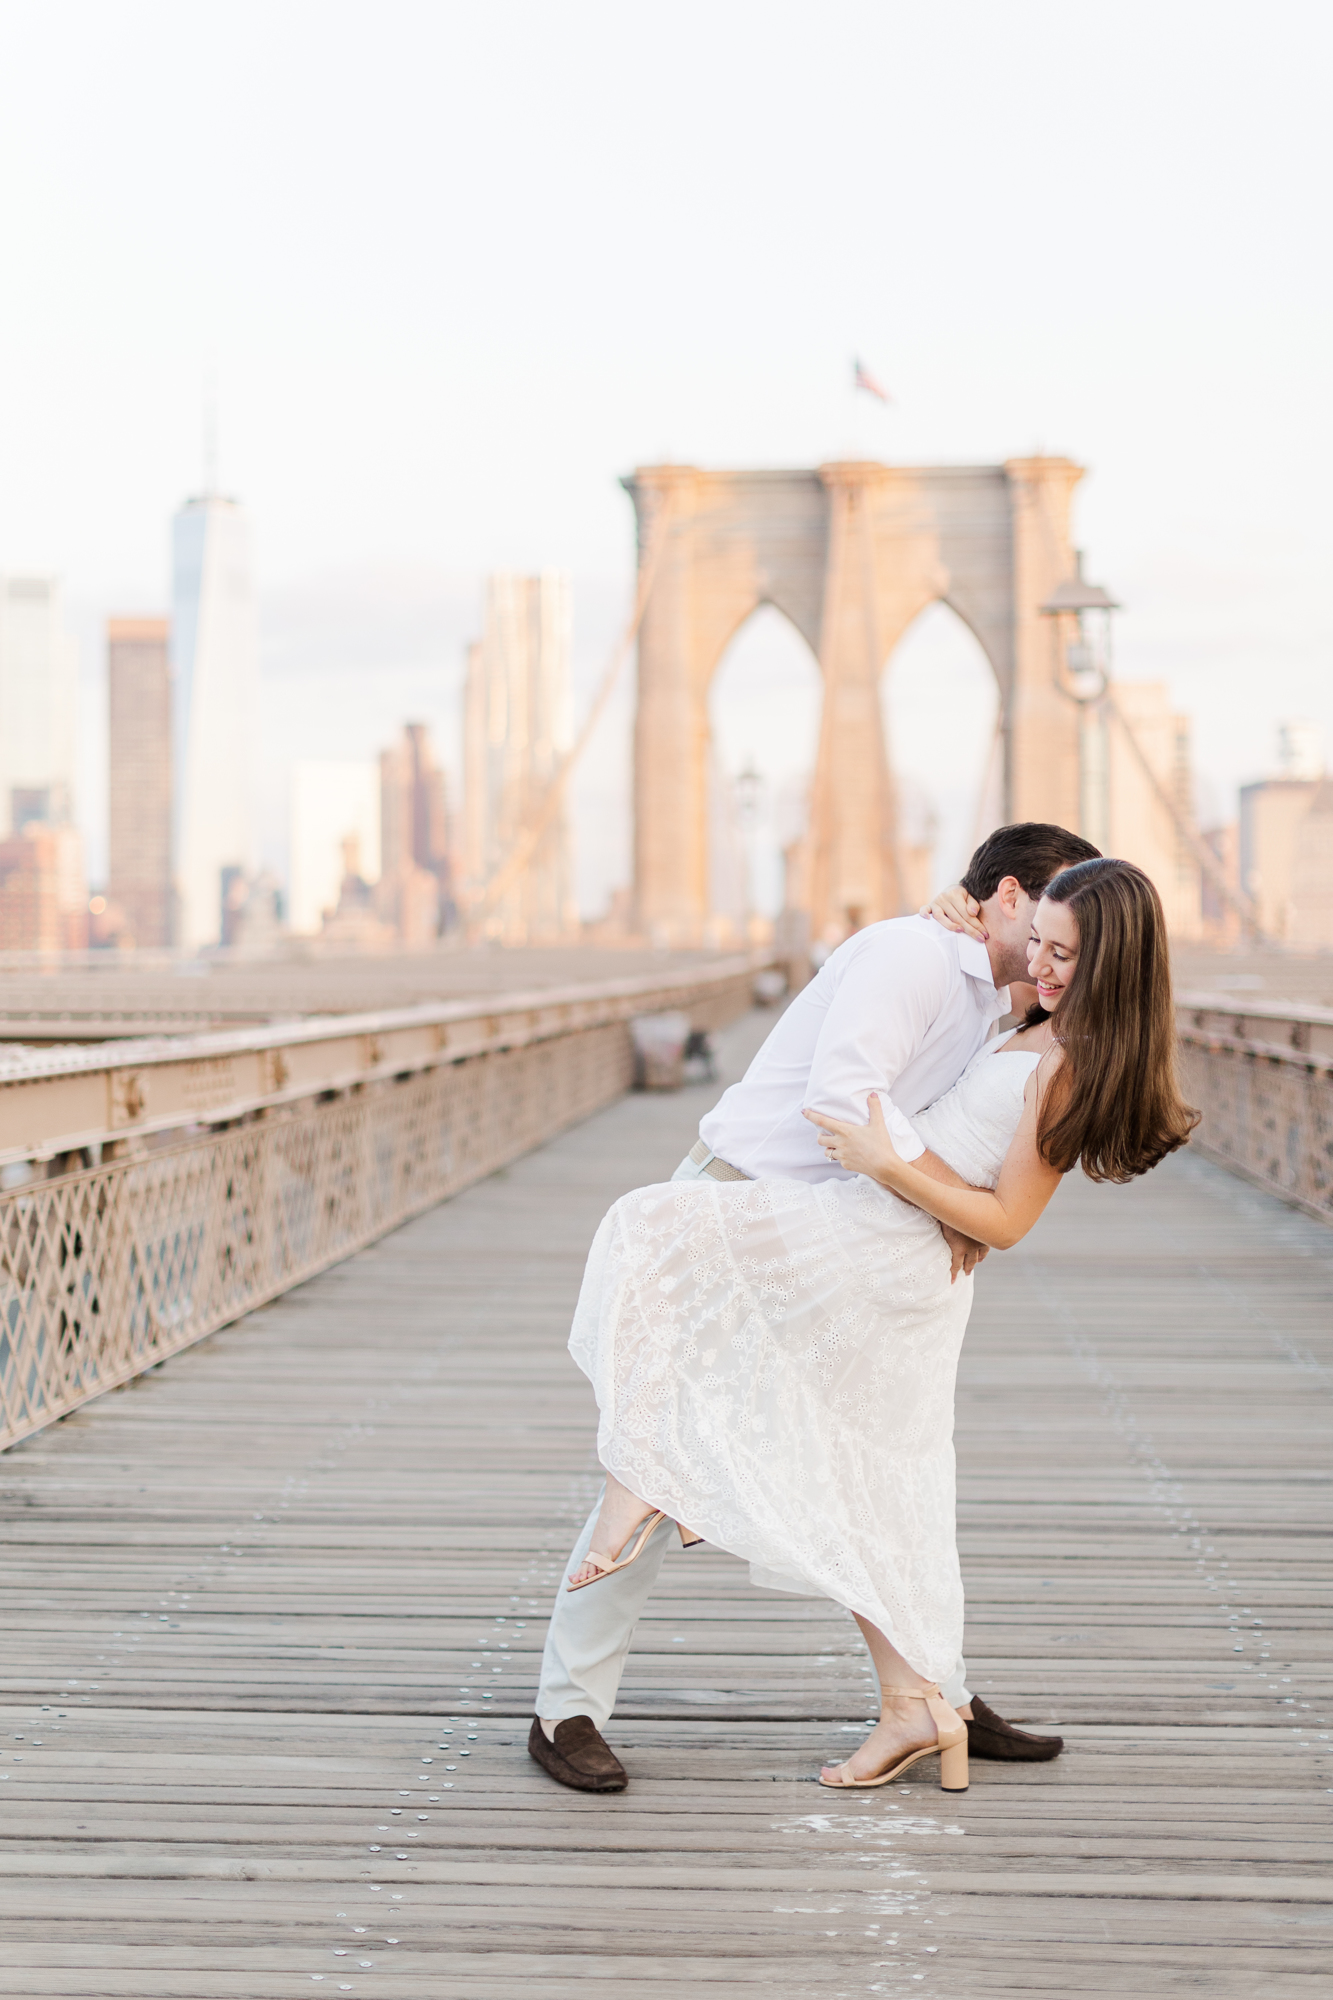 Personal Brooklyn Bridge Engagement Photography